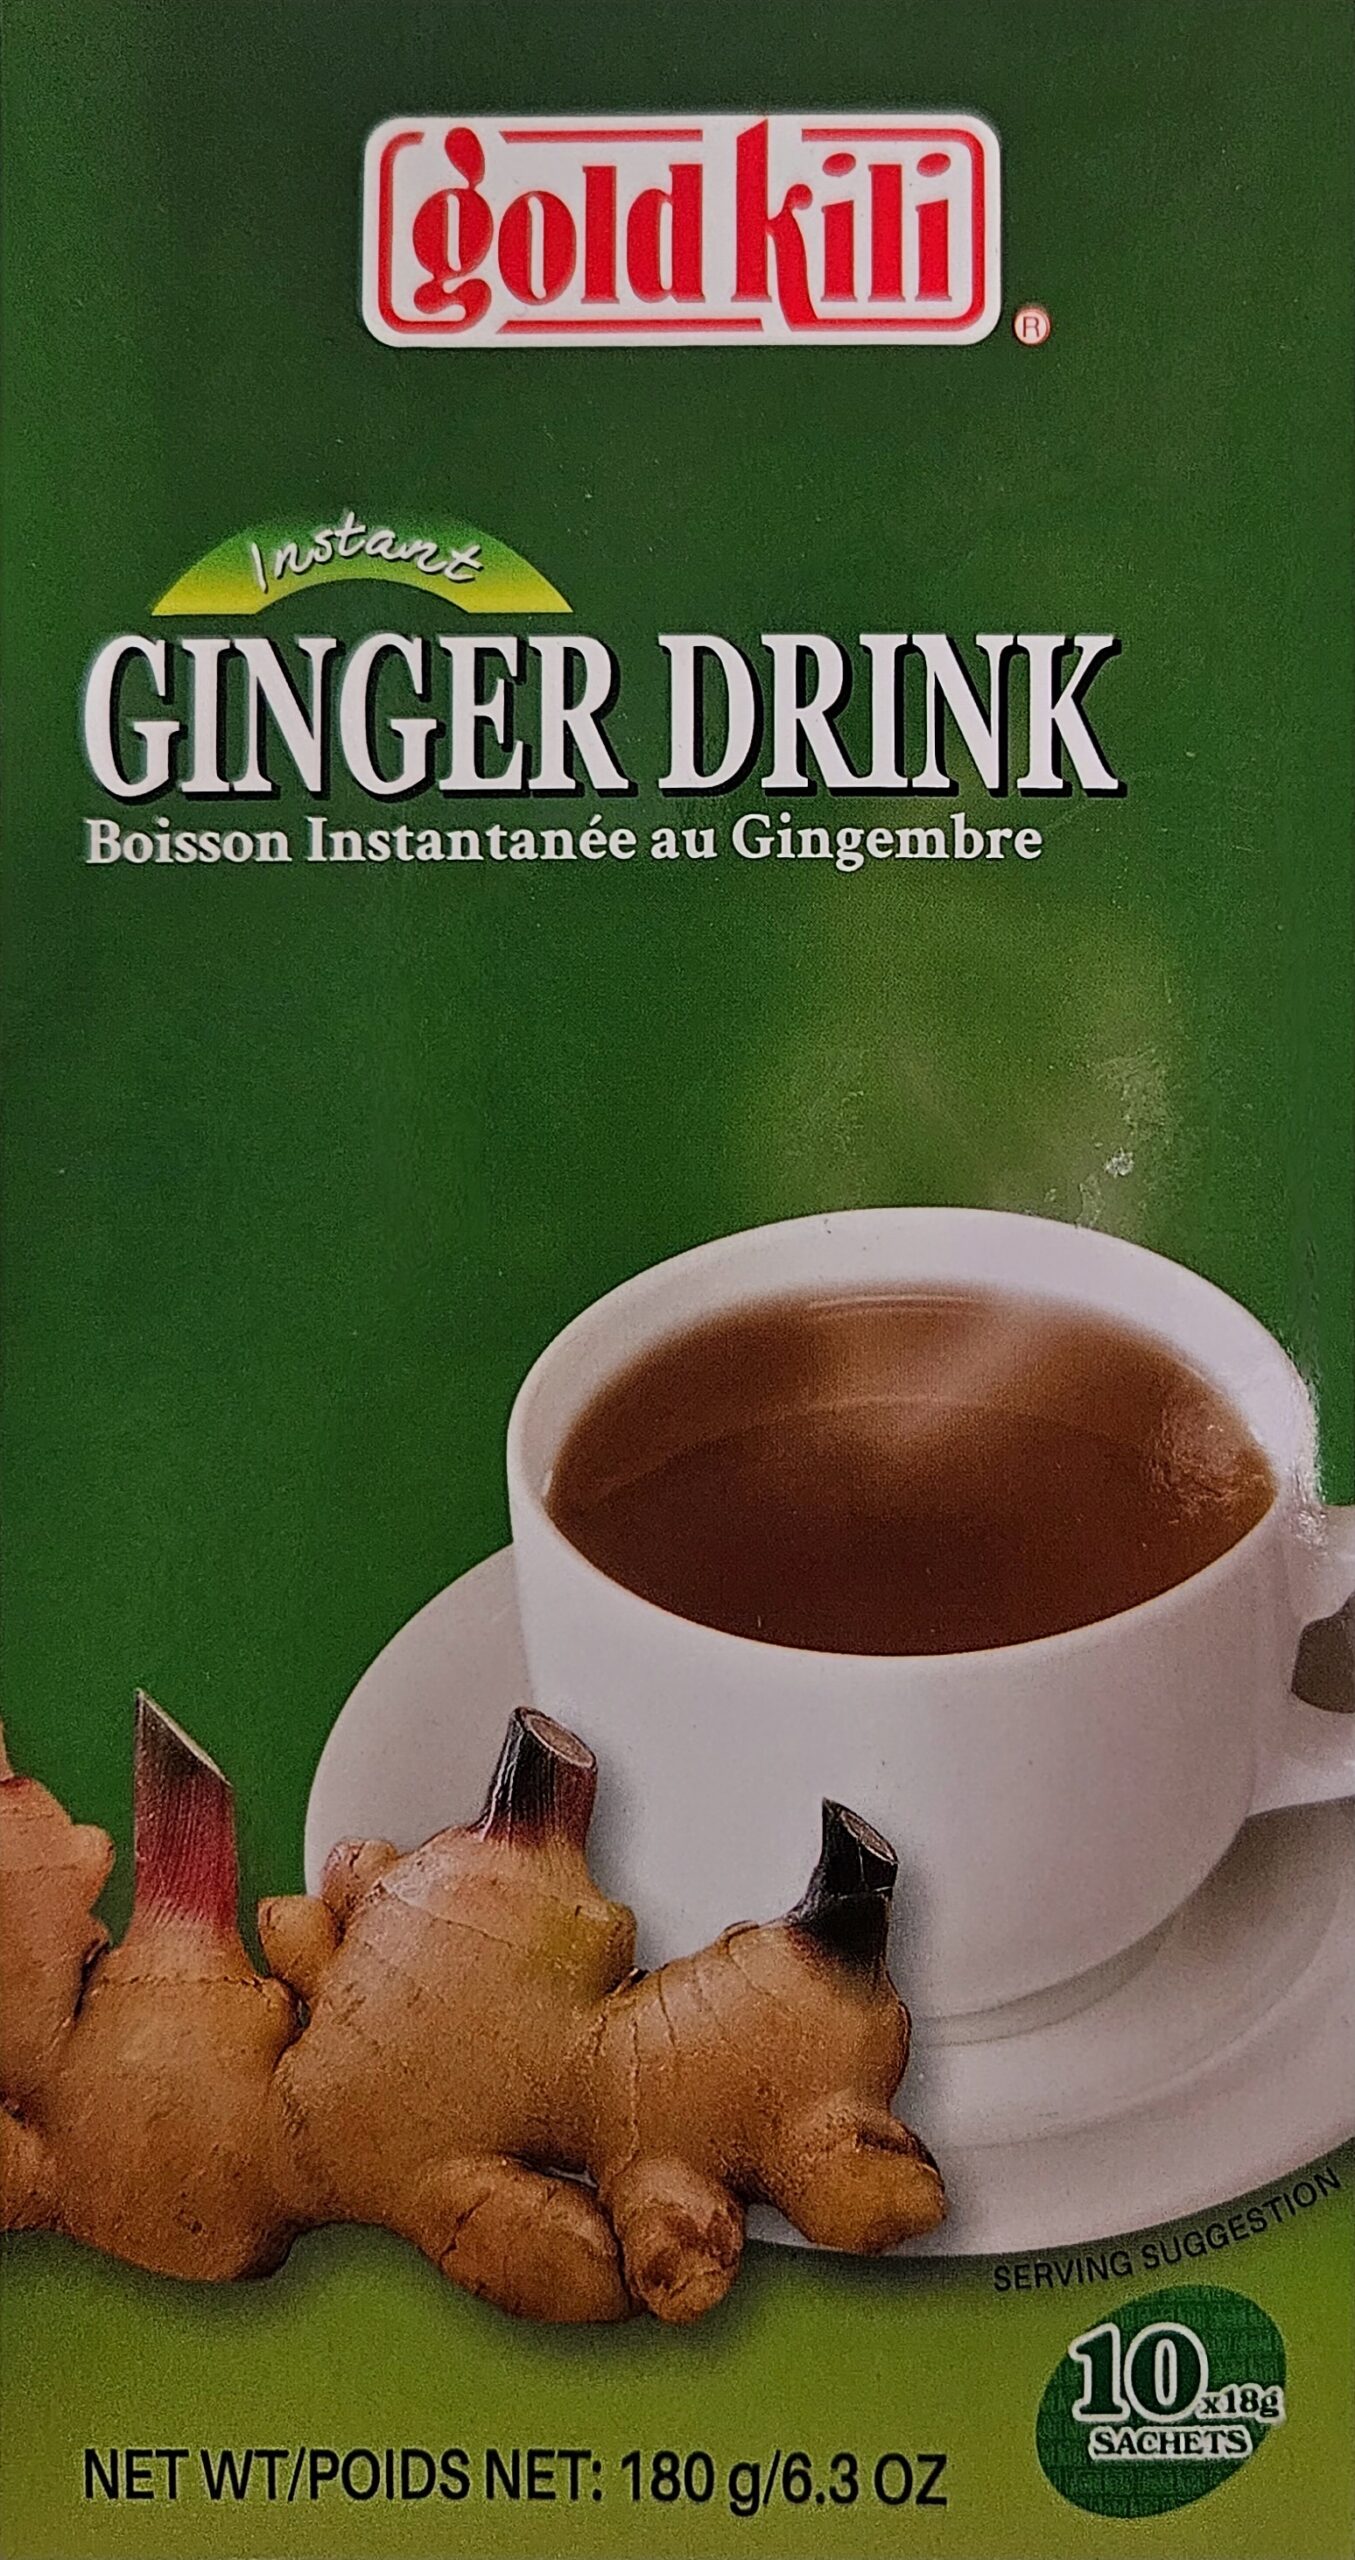 Gold kili ginger drink – boisson instantanée au gingembre – 10x18g – 180g